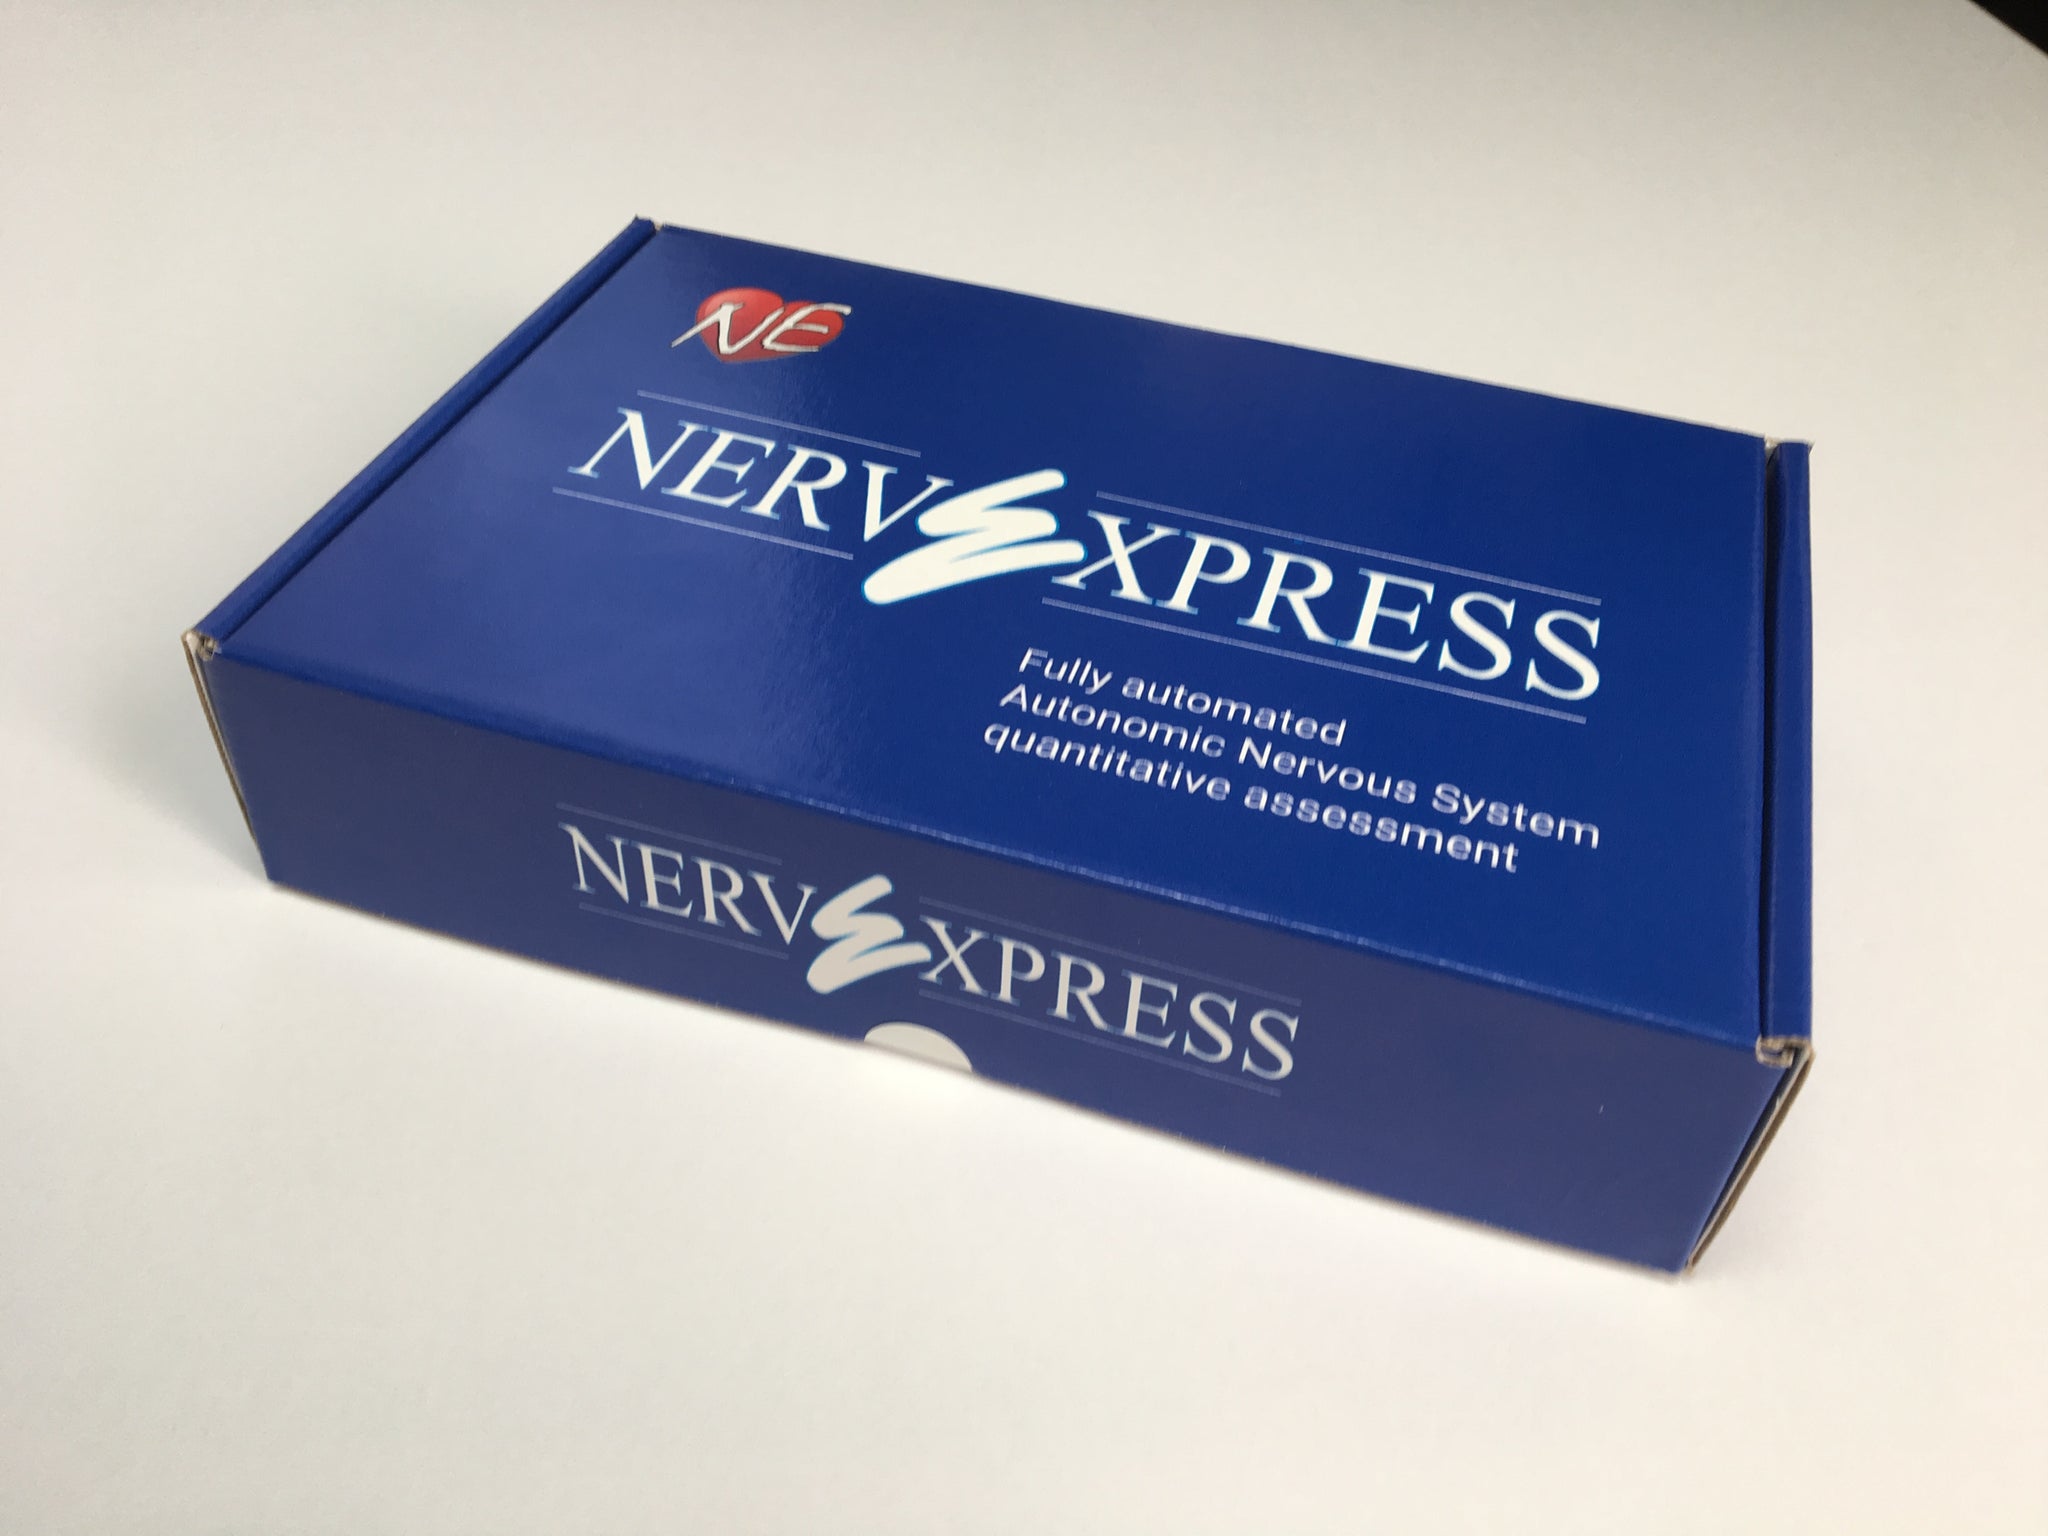 Nerve-Express, Version 7.5